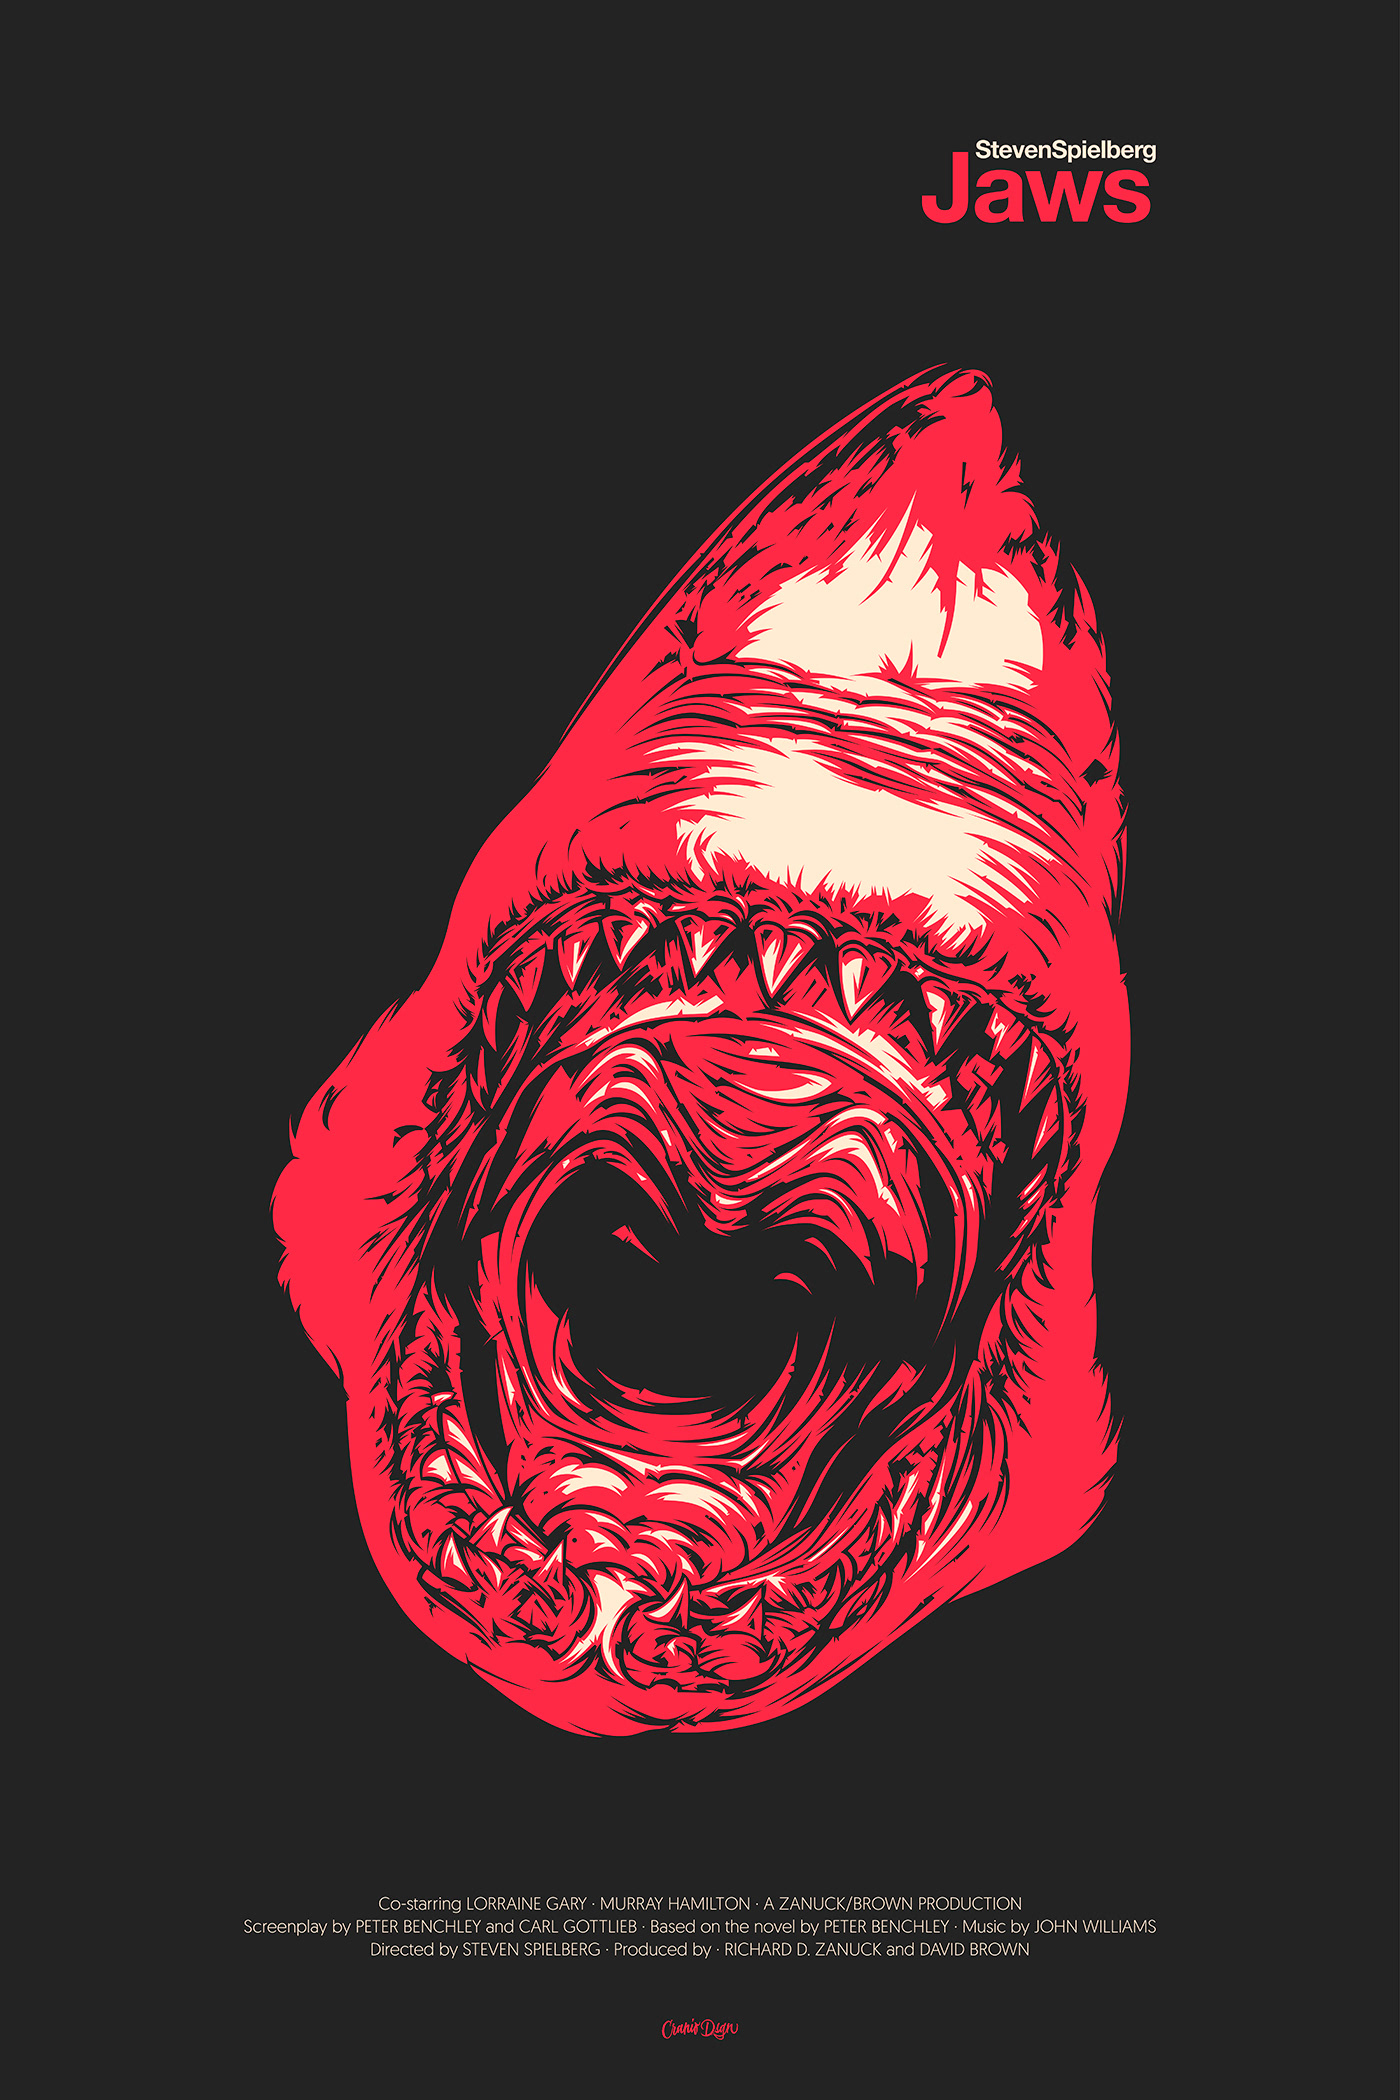 psycho norman bates shark Mouth Terror horror poster Film   movie jaws